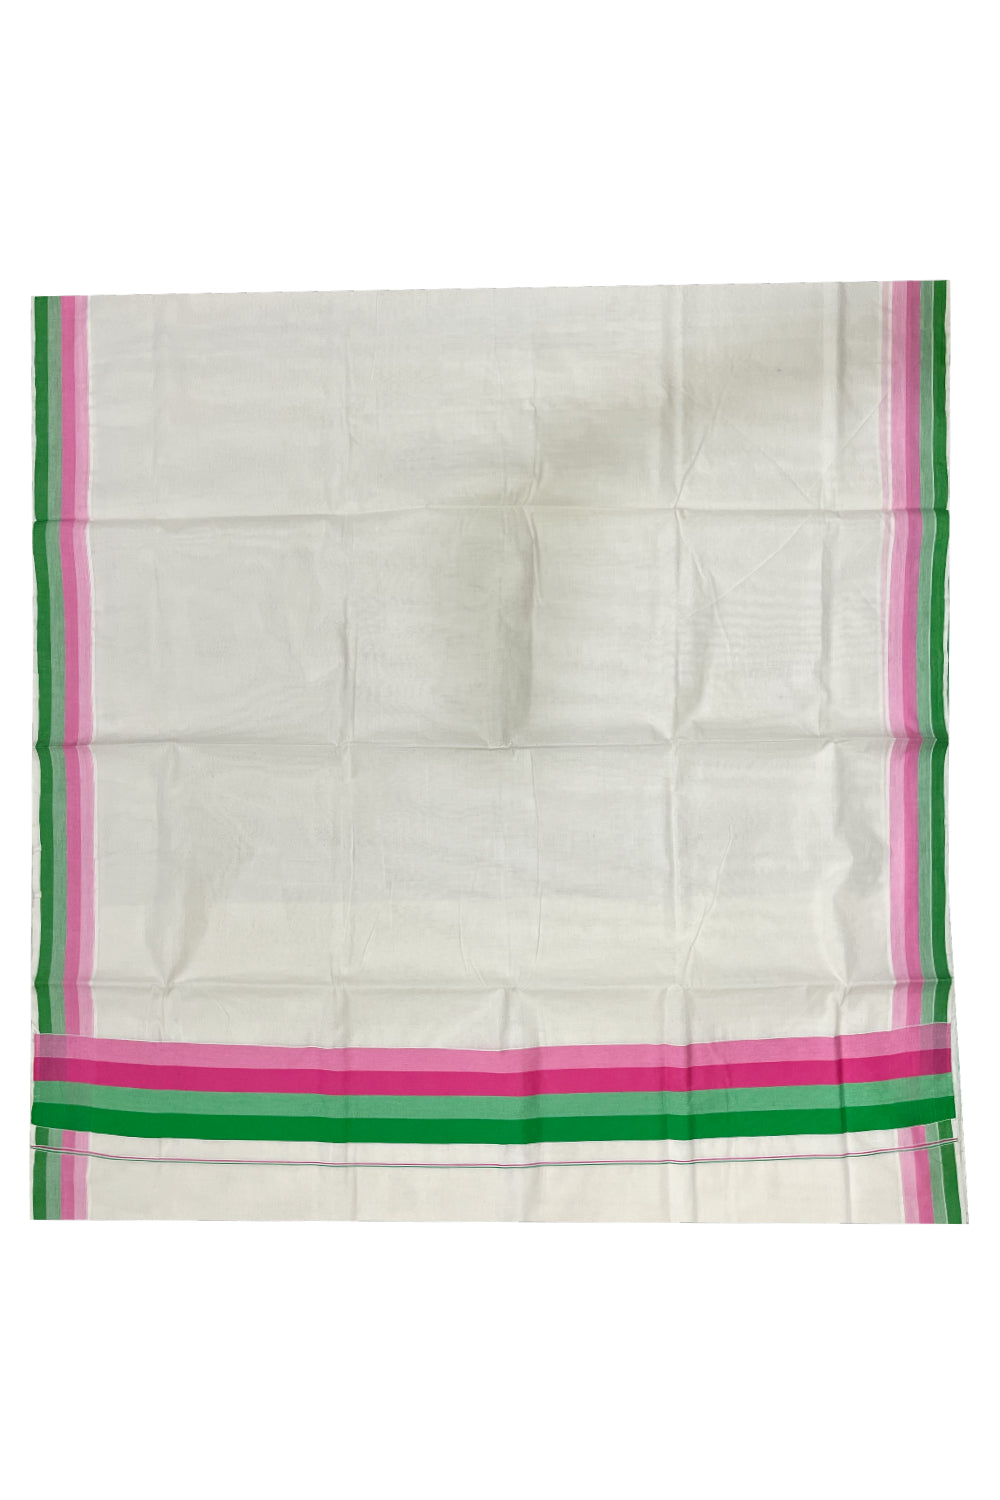 Pure Cotton Kerala Plain Saree with Pink Green Border